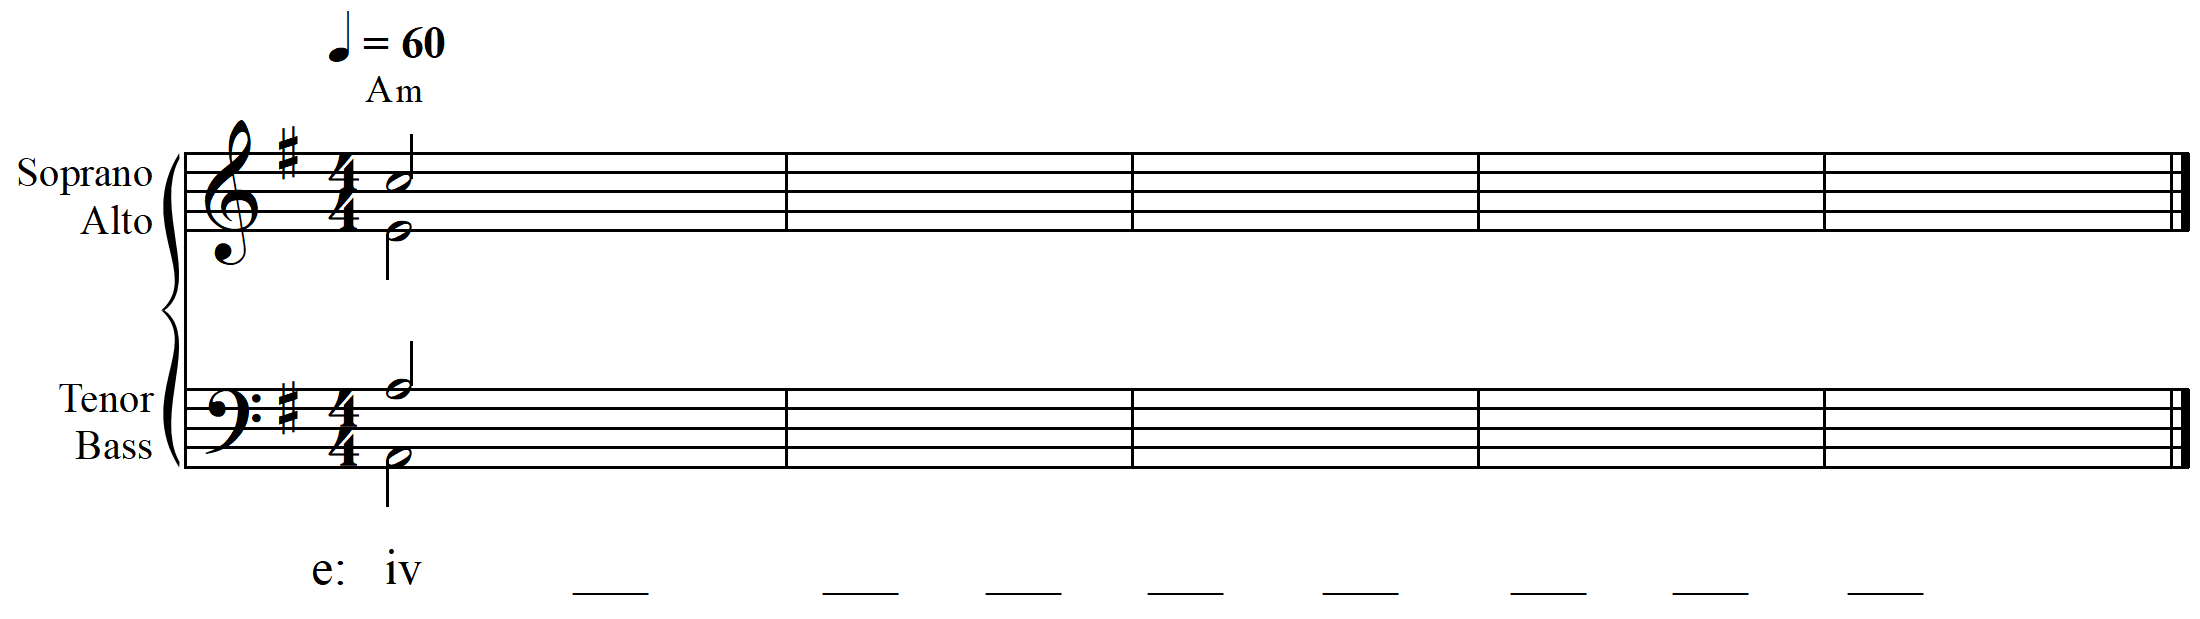 melodic dictation simple meter intermediate example 3